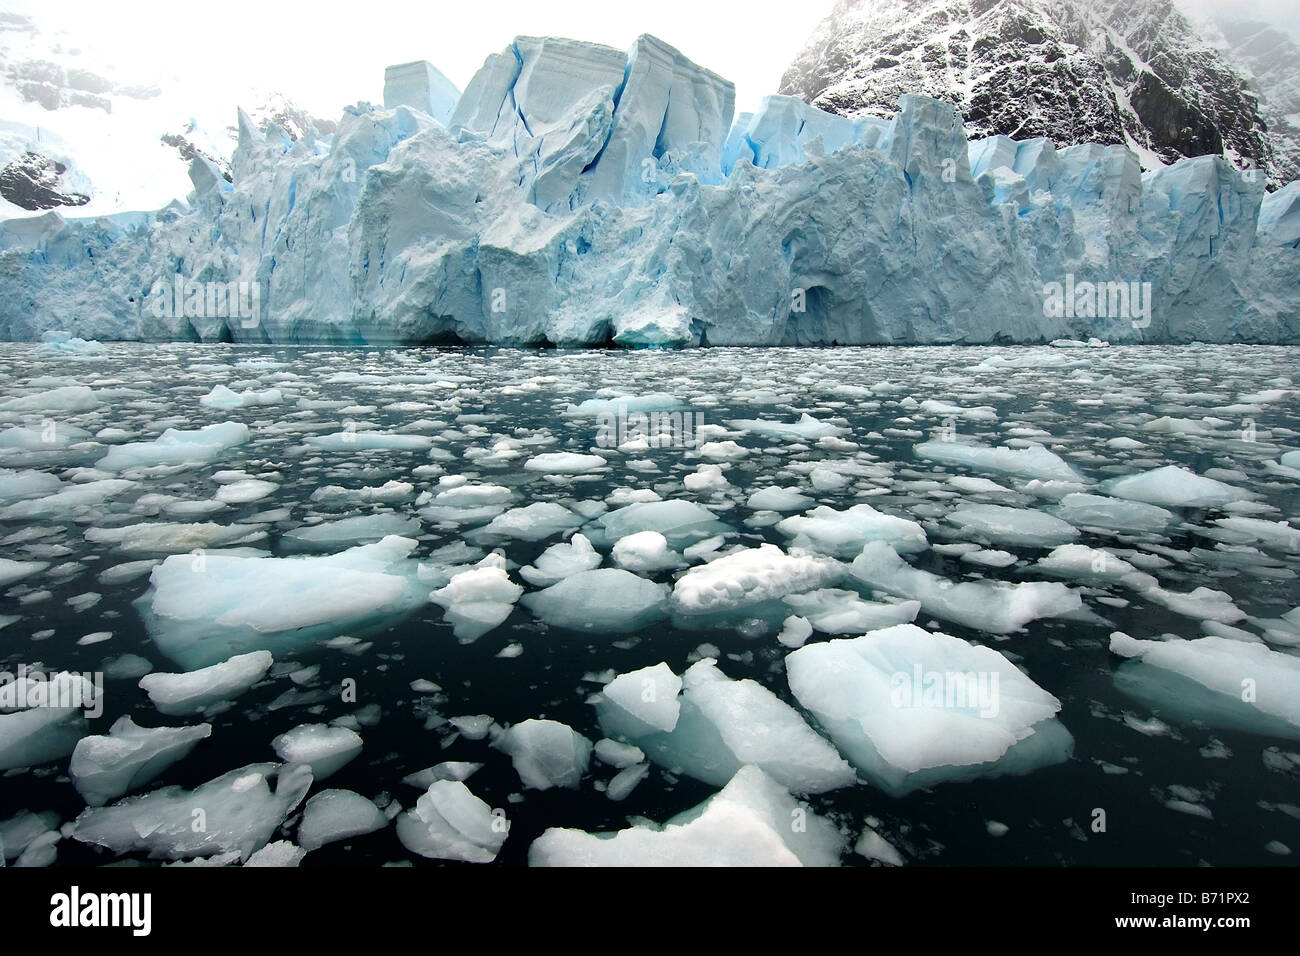 Antartica glaciar, remote place, wild place, cold, ice, snow, ice blocks Stock Photo